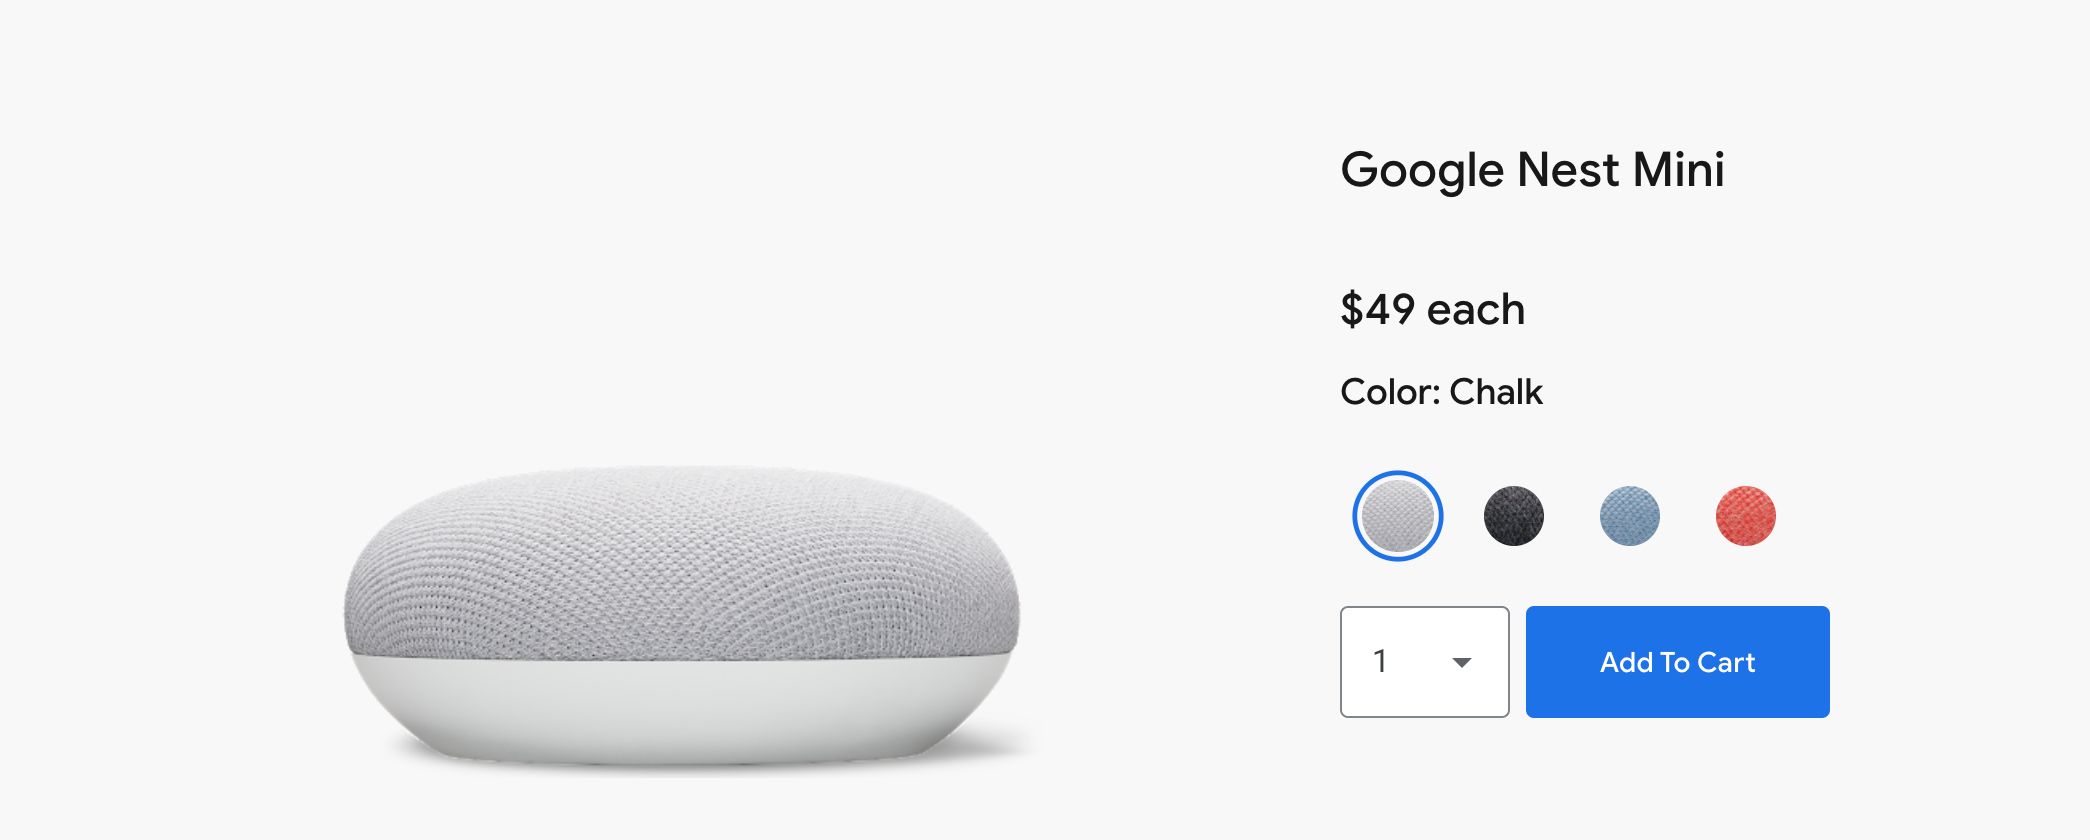 Google Nest Mini Price